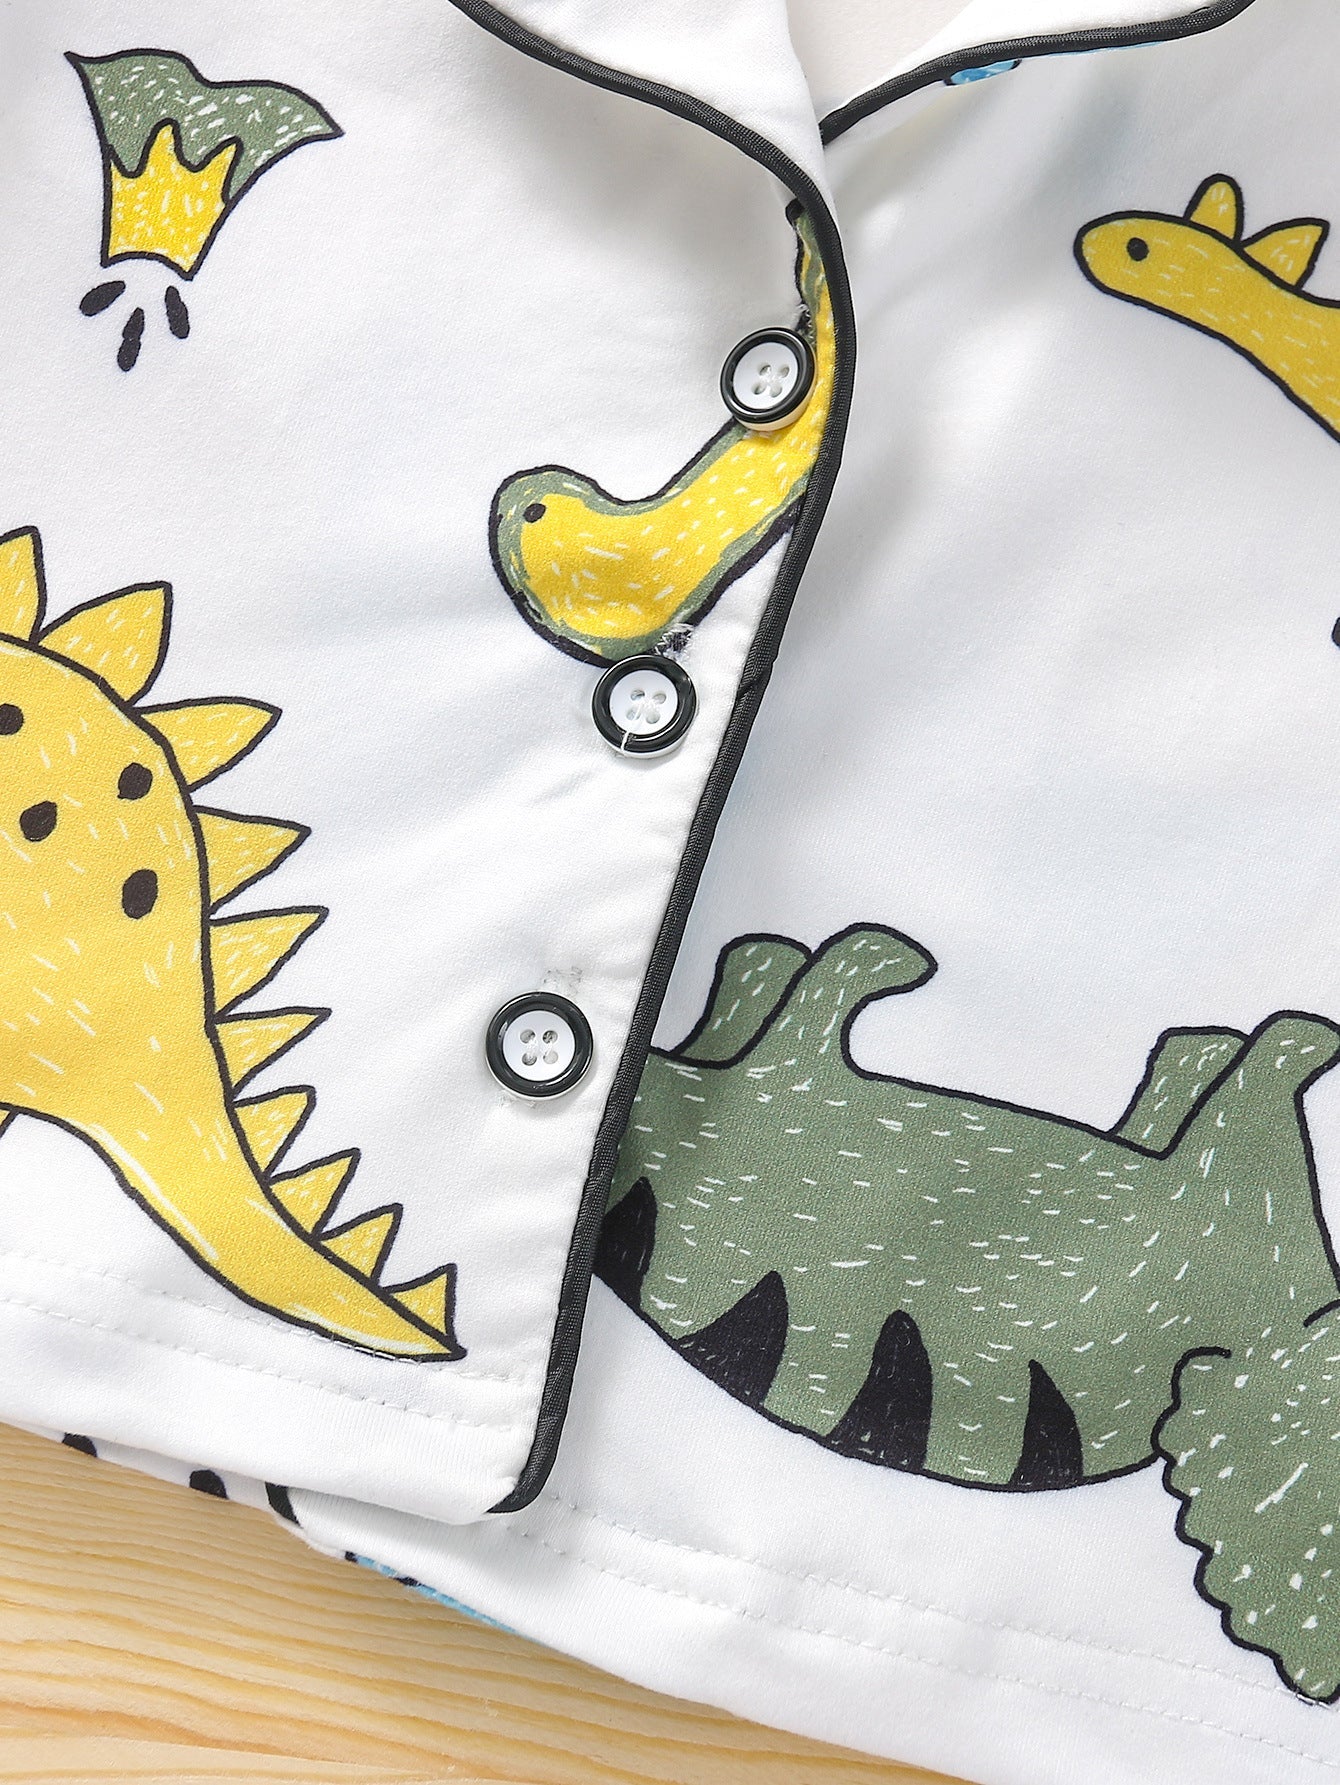 Toddler Boys Cotton Silk Cartoon Dinosaur Printed Shirt Shorts Pajamas Summer Home Clothes